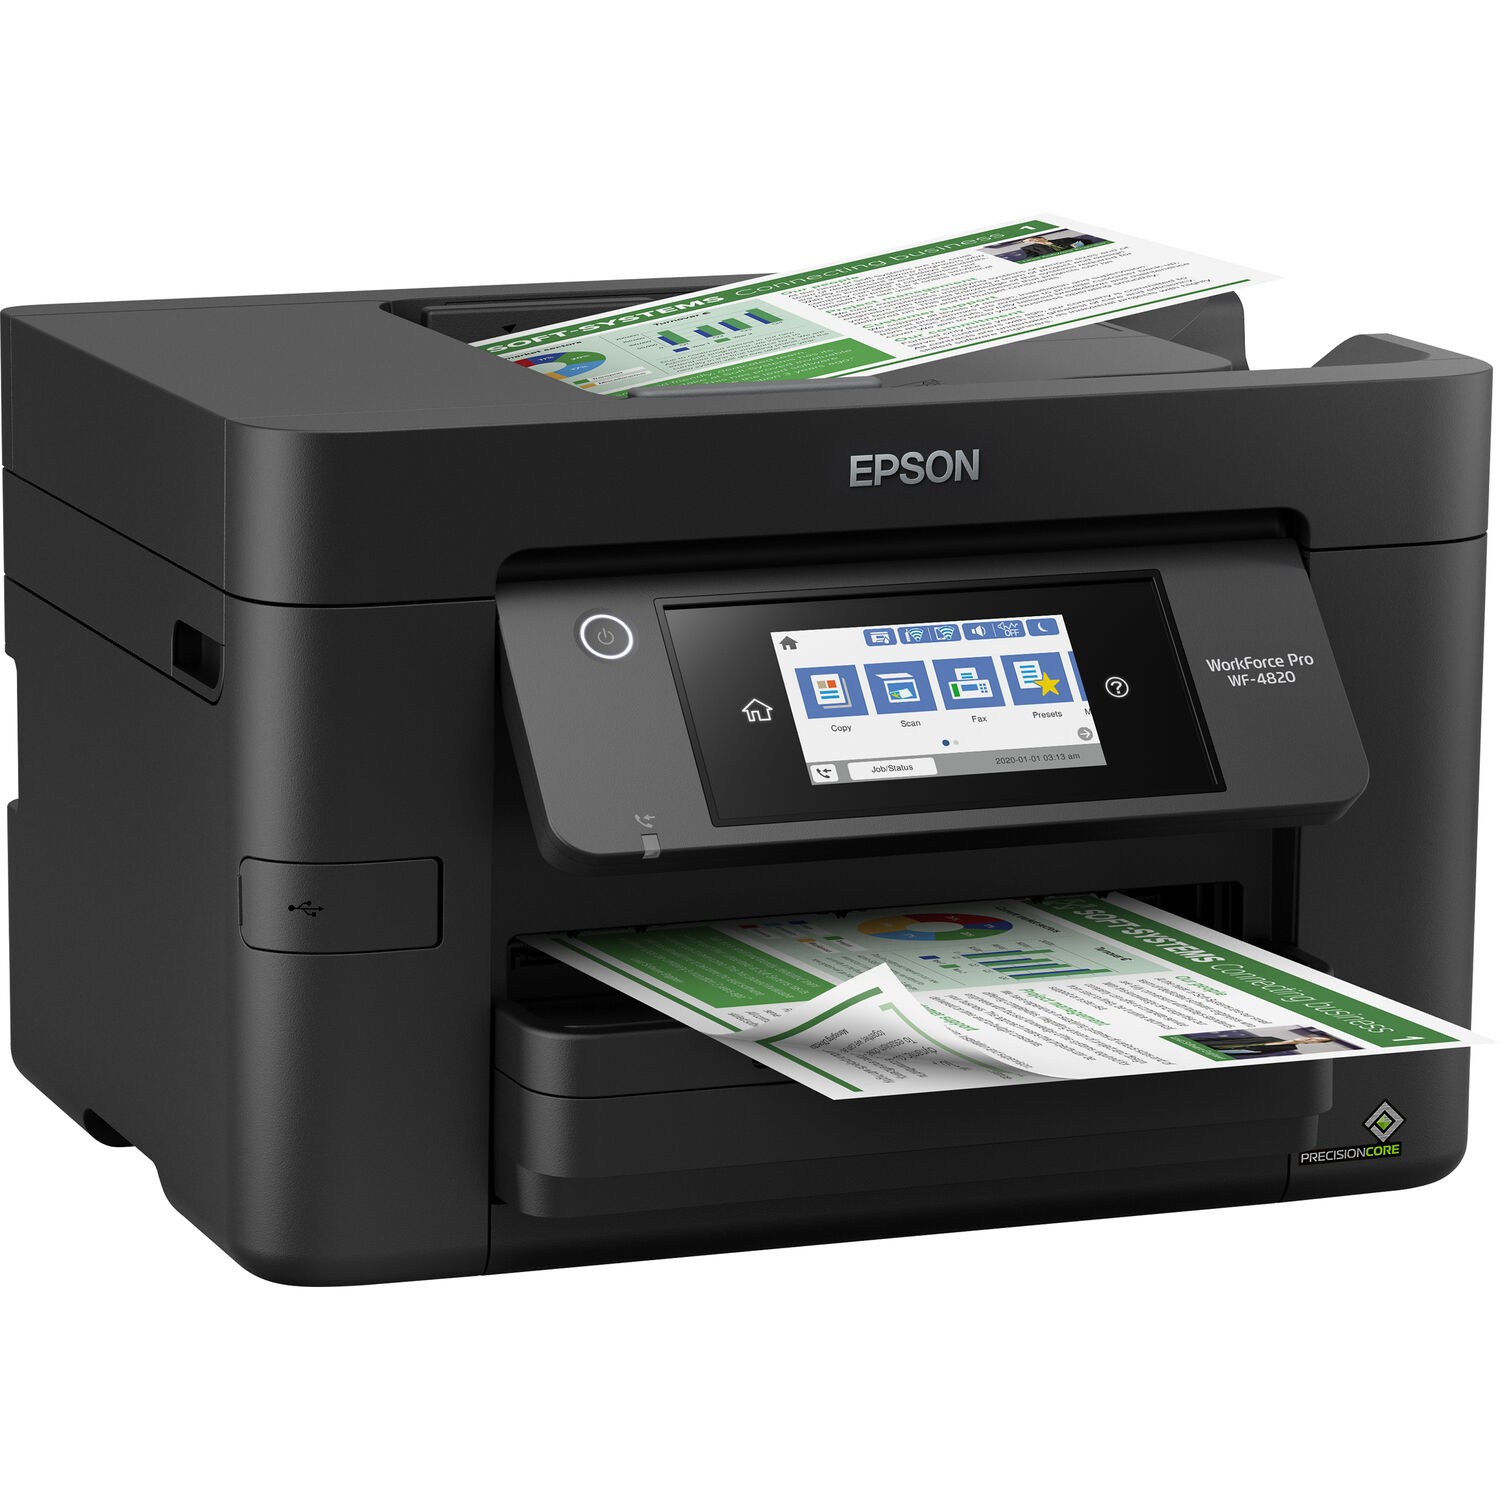 Impresora Multifunción Epson Workforce Pro Wf 4820 a Tinta